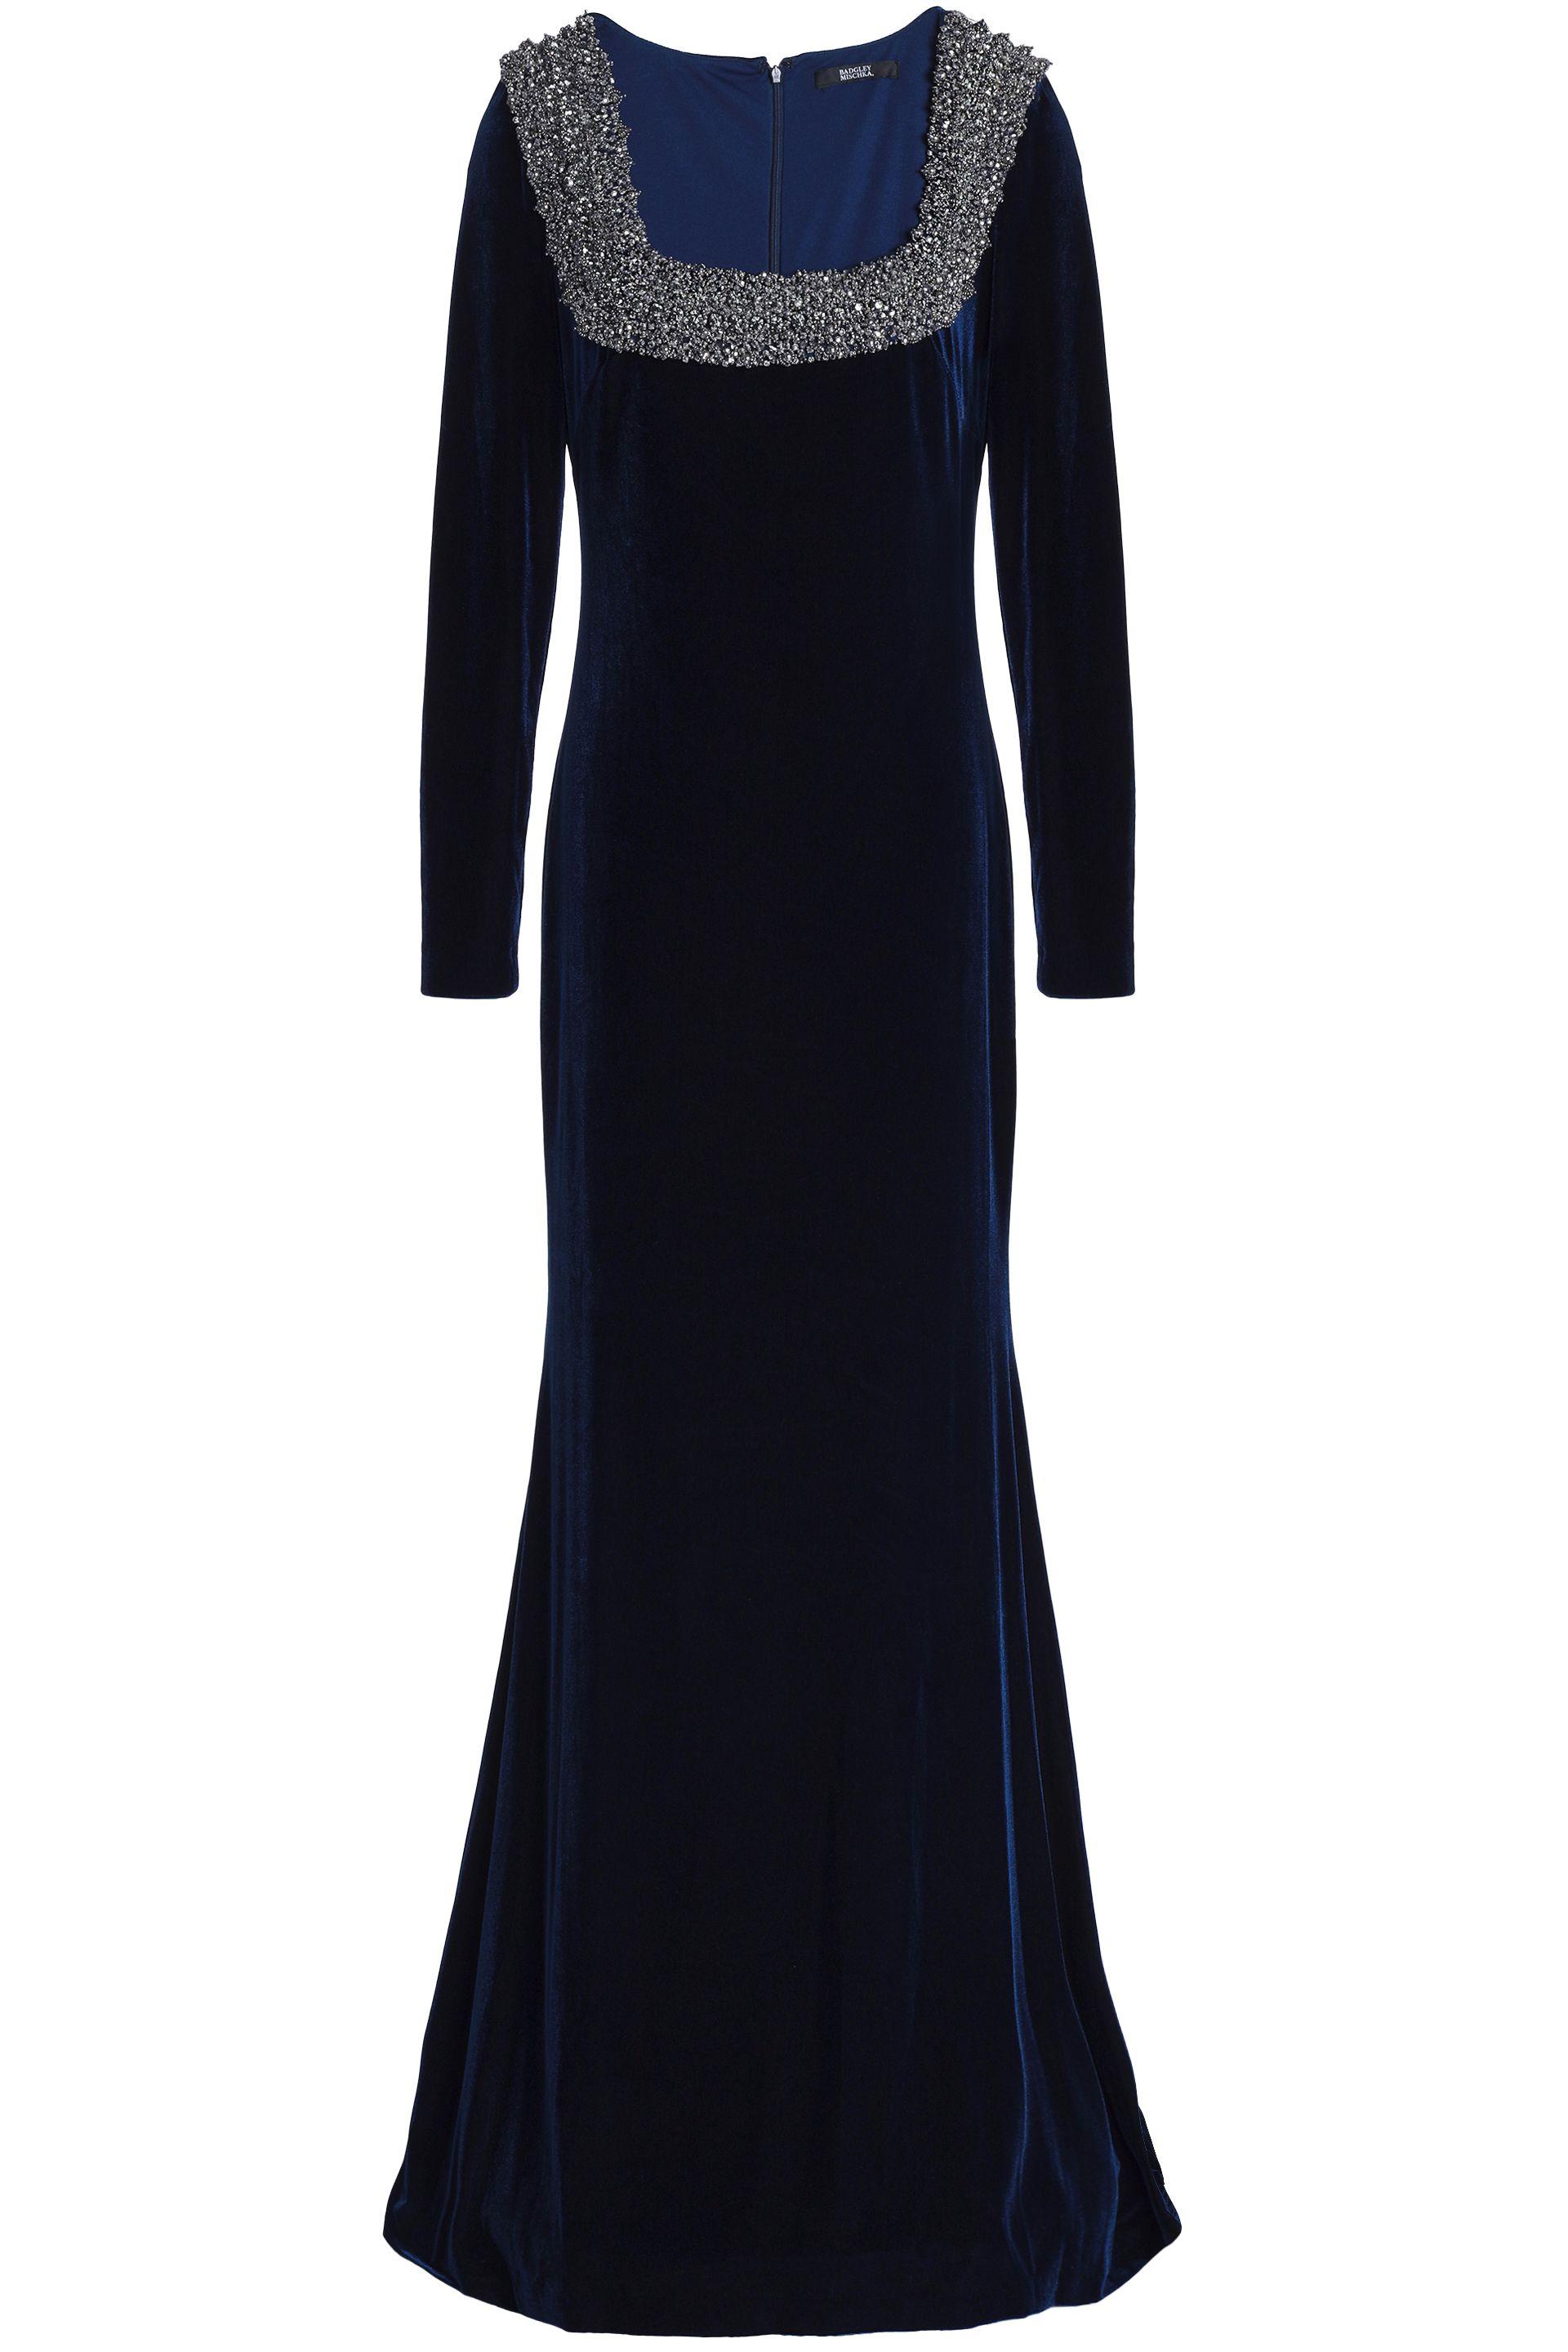 Badgley Mischka Embellished Fluted Velvet Gown Navy in Blue - Lyst